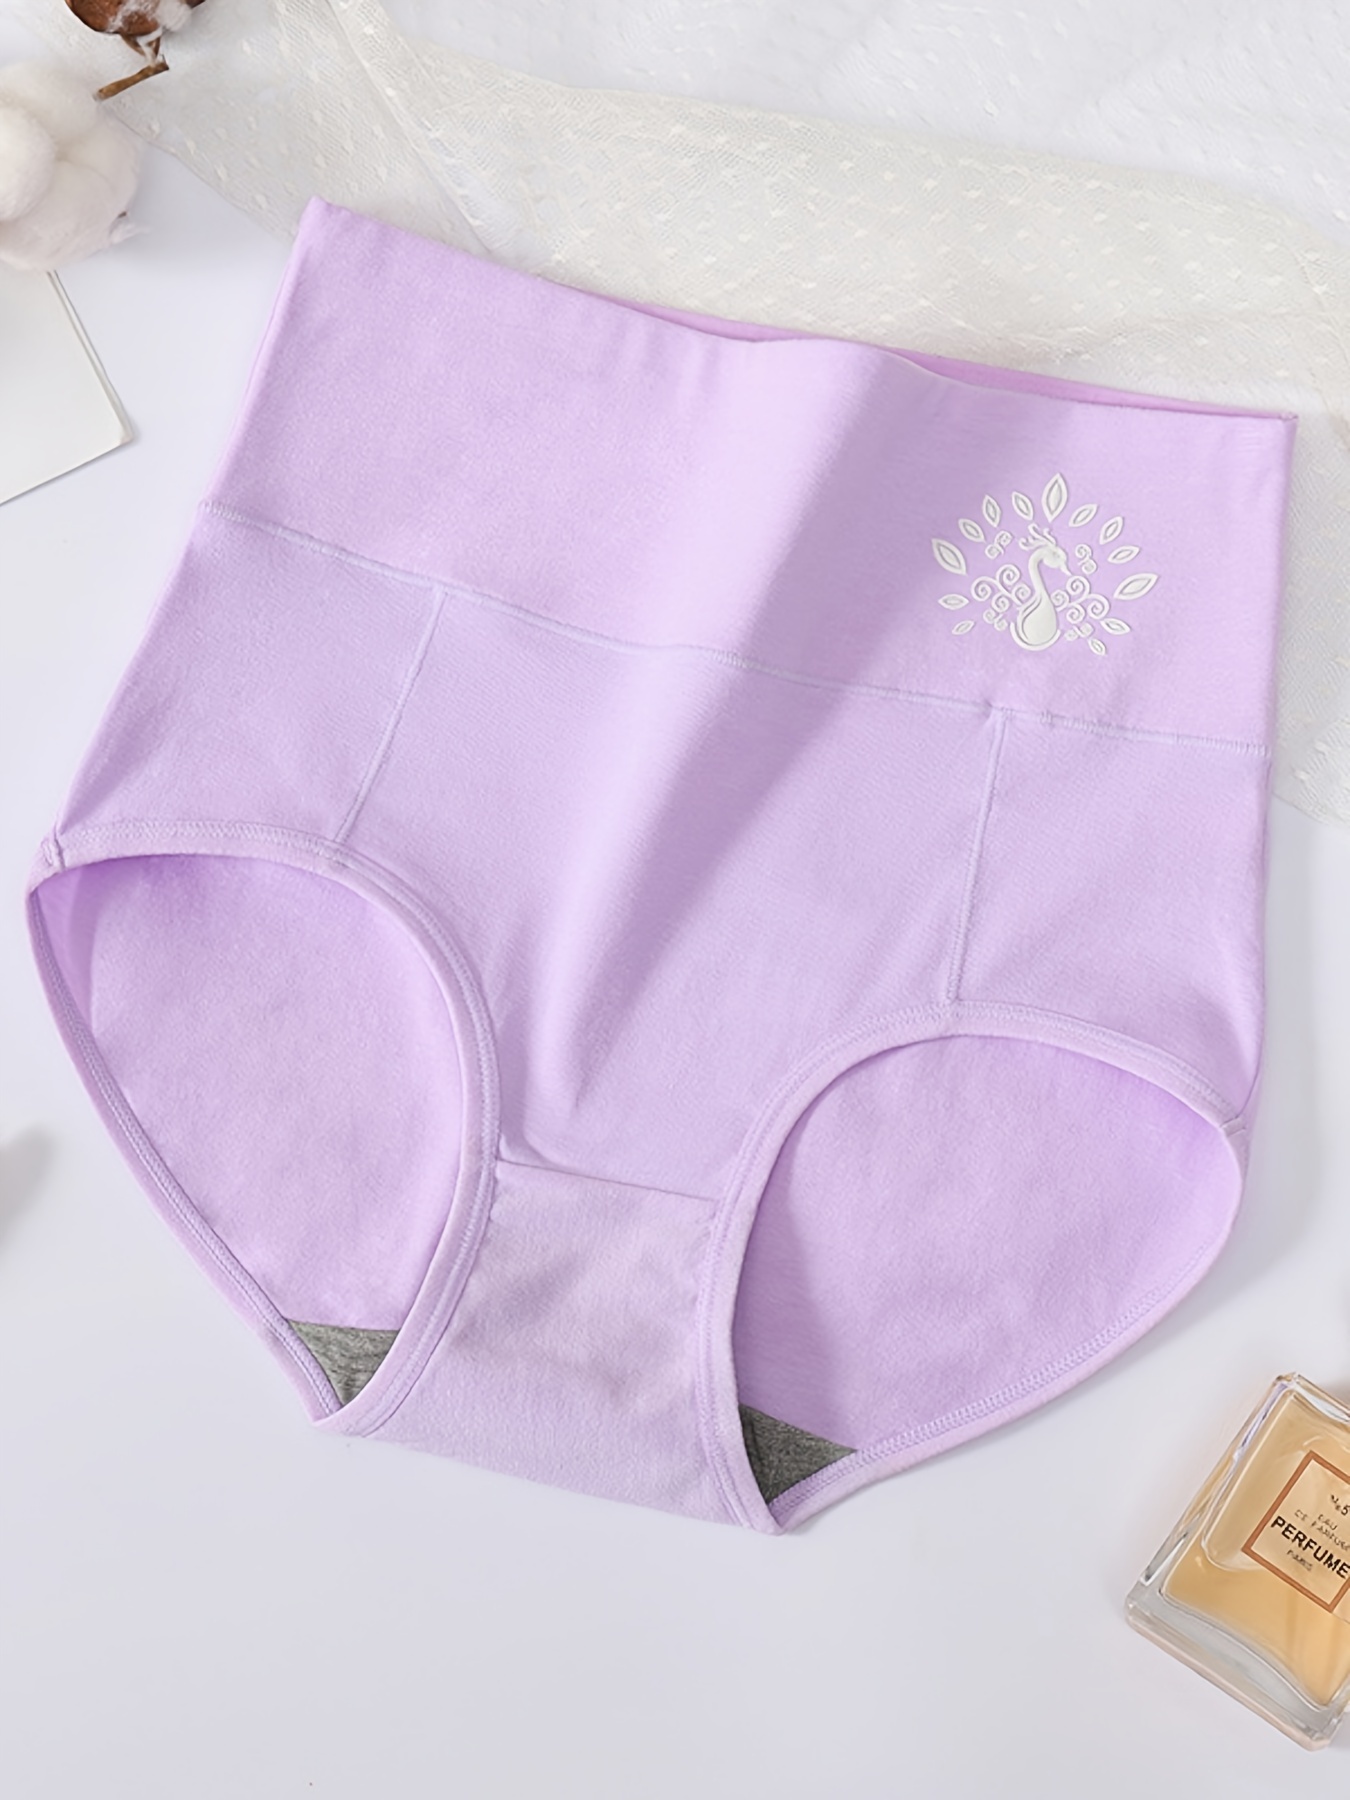 4PCS Lady Briefs Pure Cotton Lace Underpants Seamless Printed Briefs